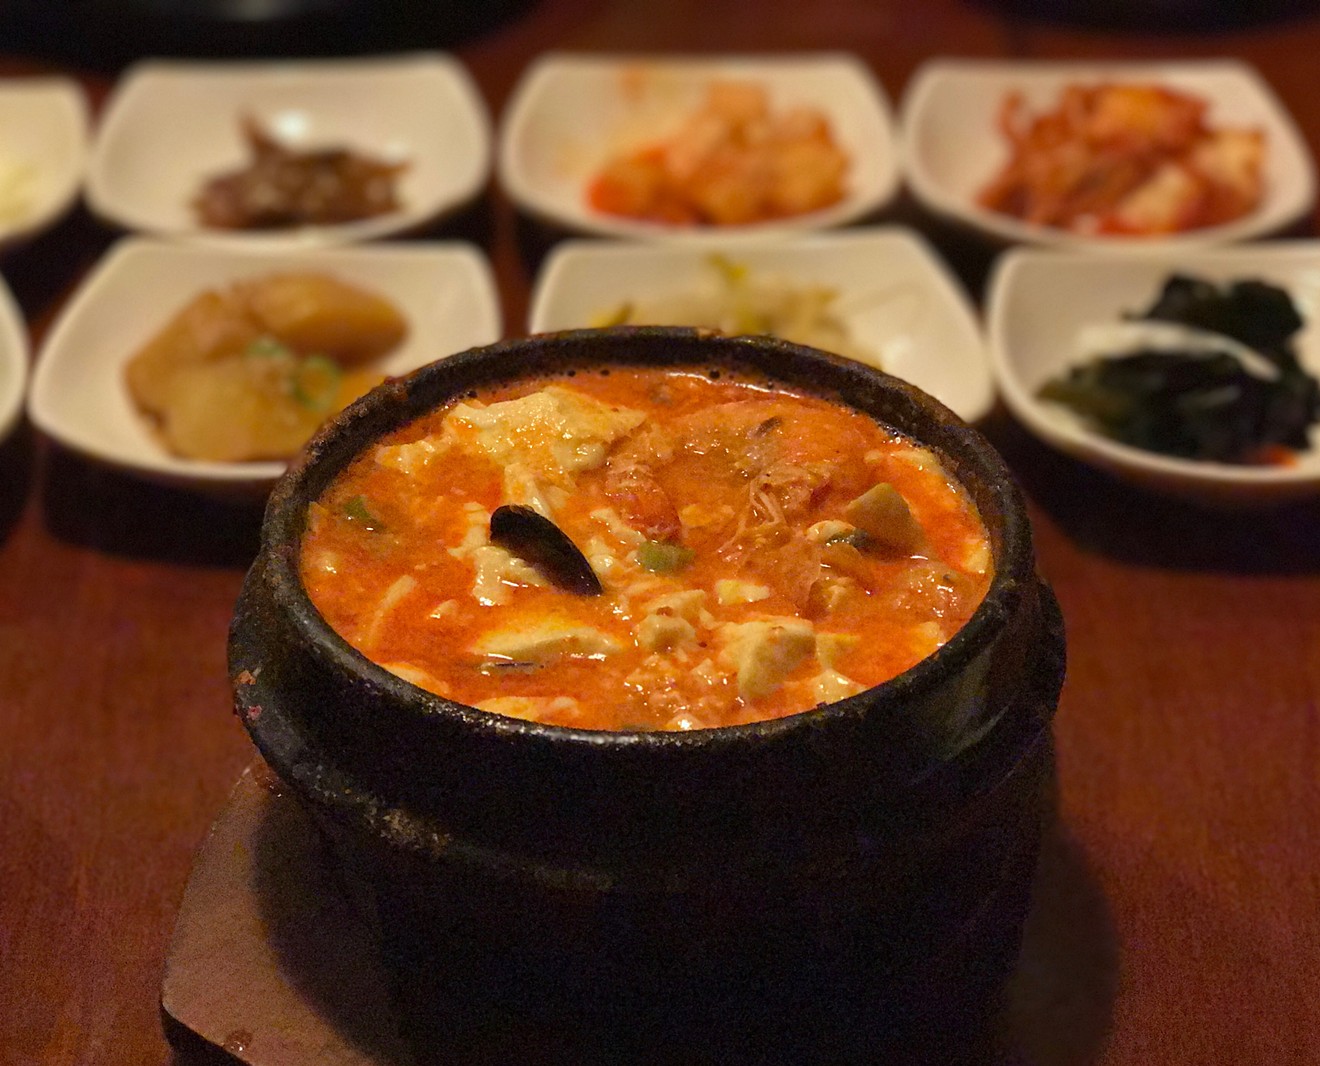 Korean spicy soft tofu soup (sundubu jjigae) at Musiro in Carrollton's Korea Town.